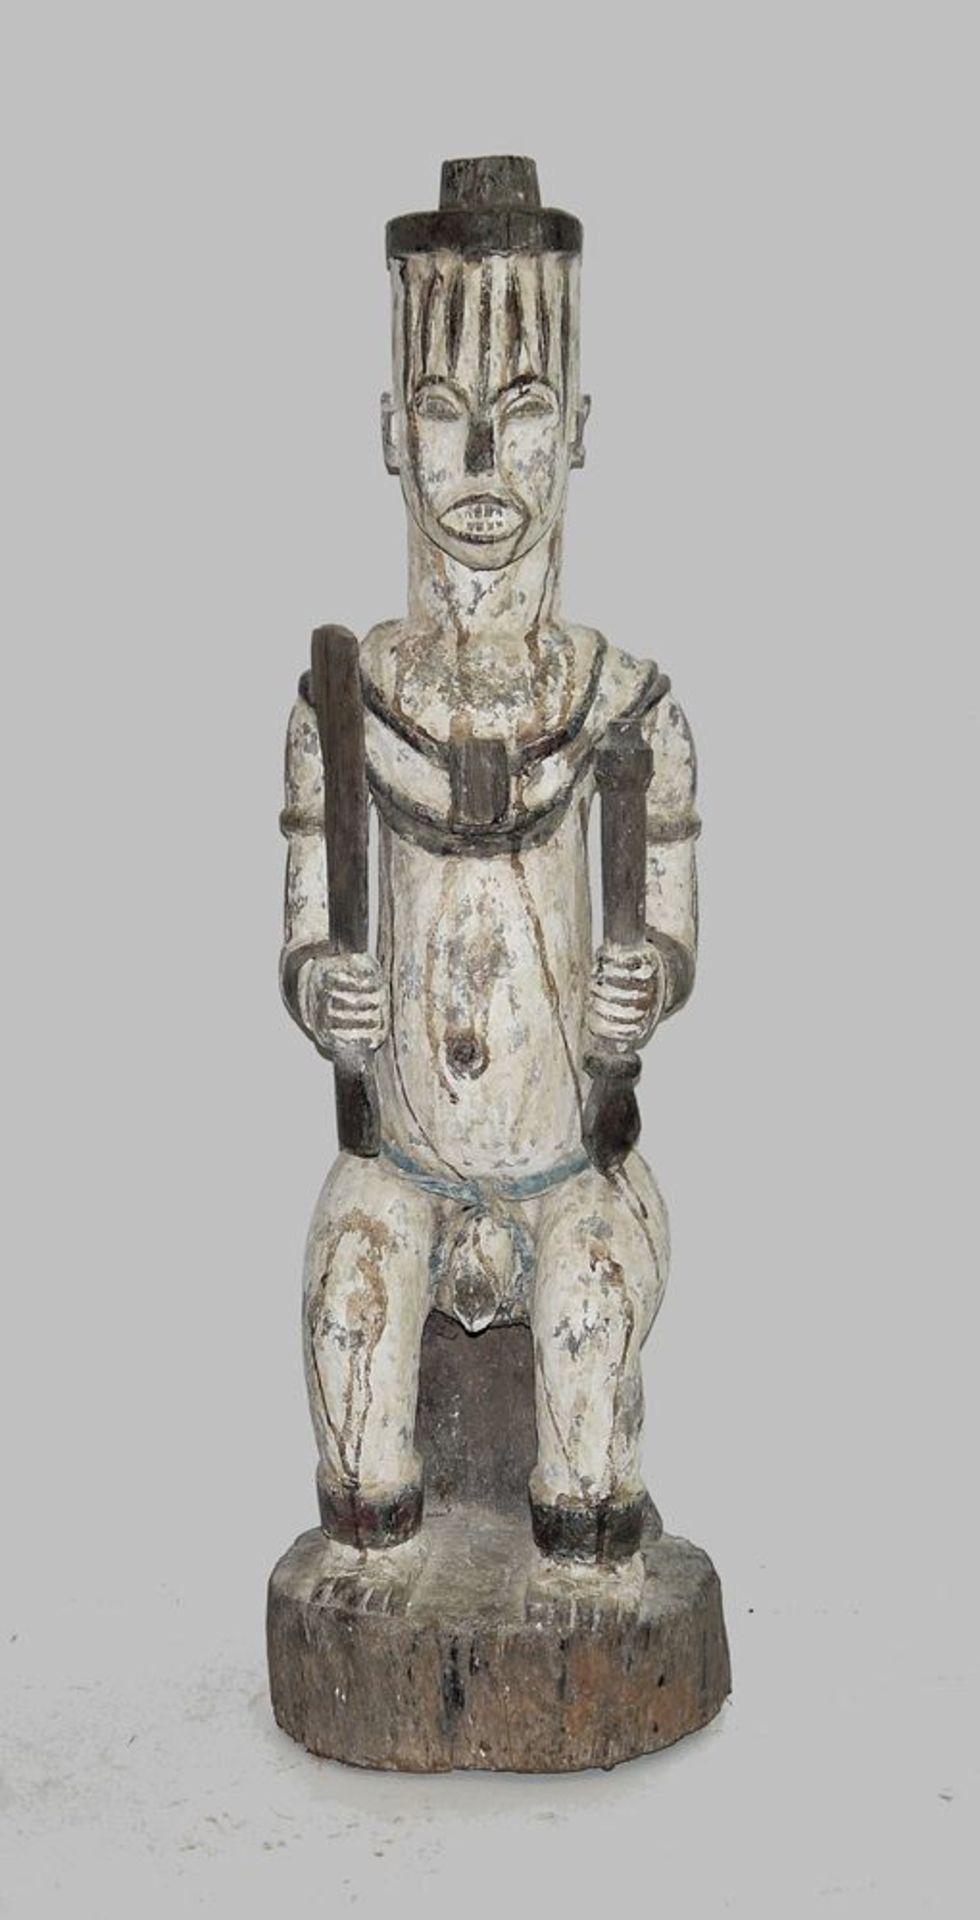 Large ancestor figure of the Urhobo, Nigeria